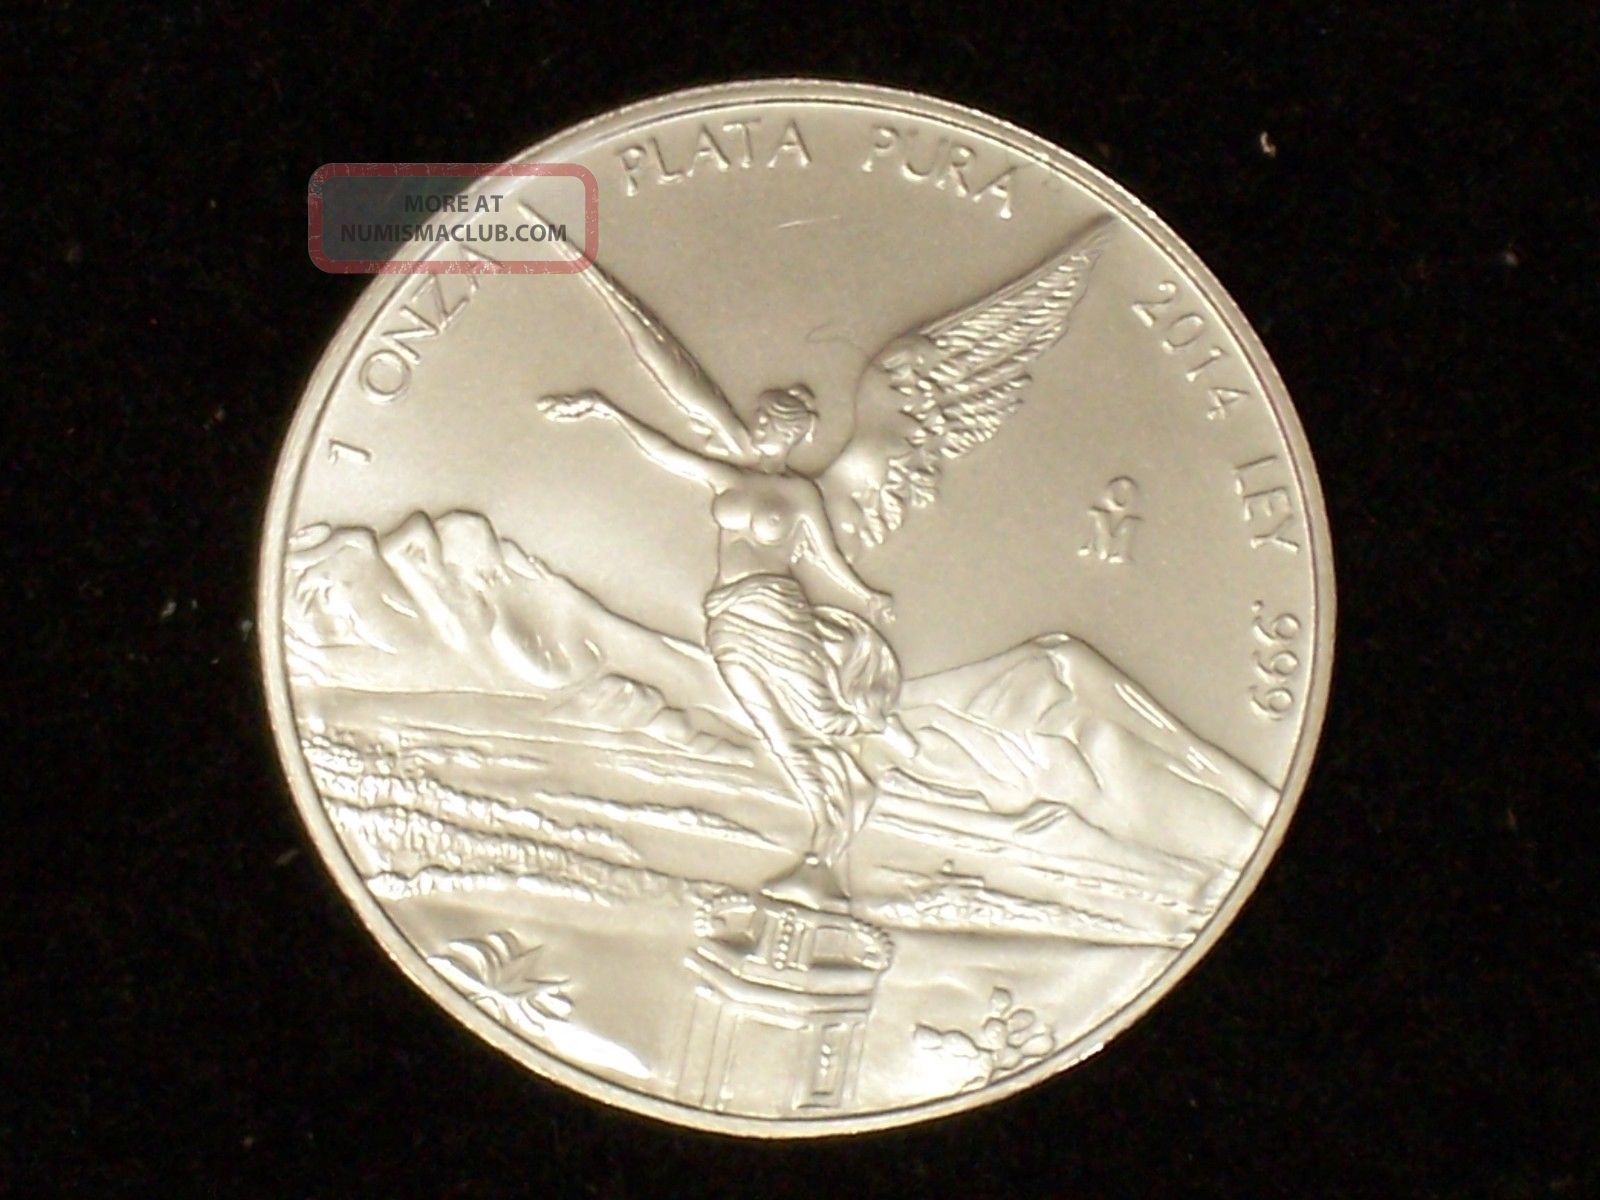 2014 1 Oz Silver 1 Onza Plata Pura -. 999 Silver Libertad Onza Mexican